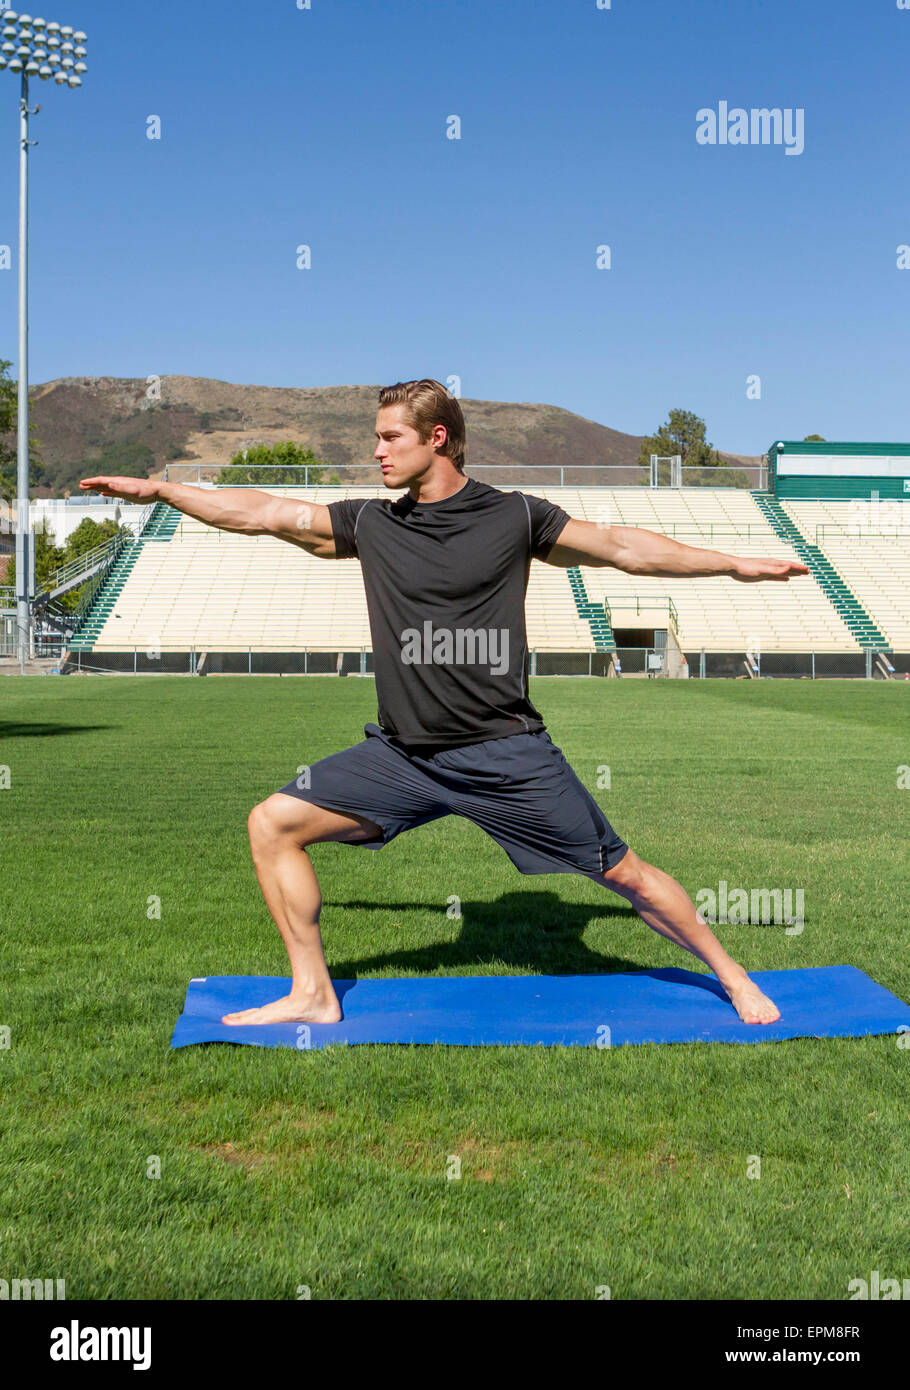 USA, California, San Luis Obispo, young man doing workout on an athletic field Stock Photo